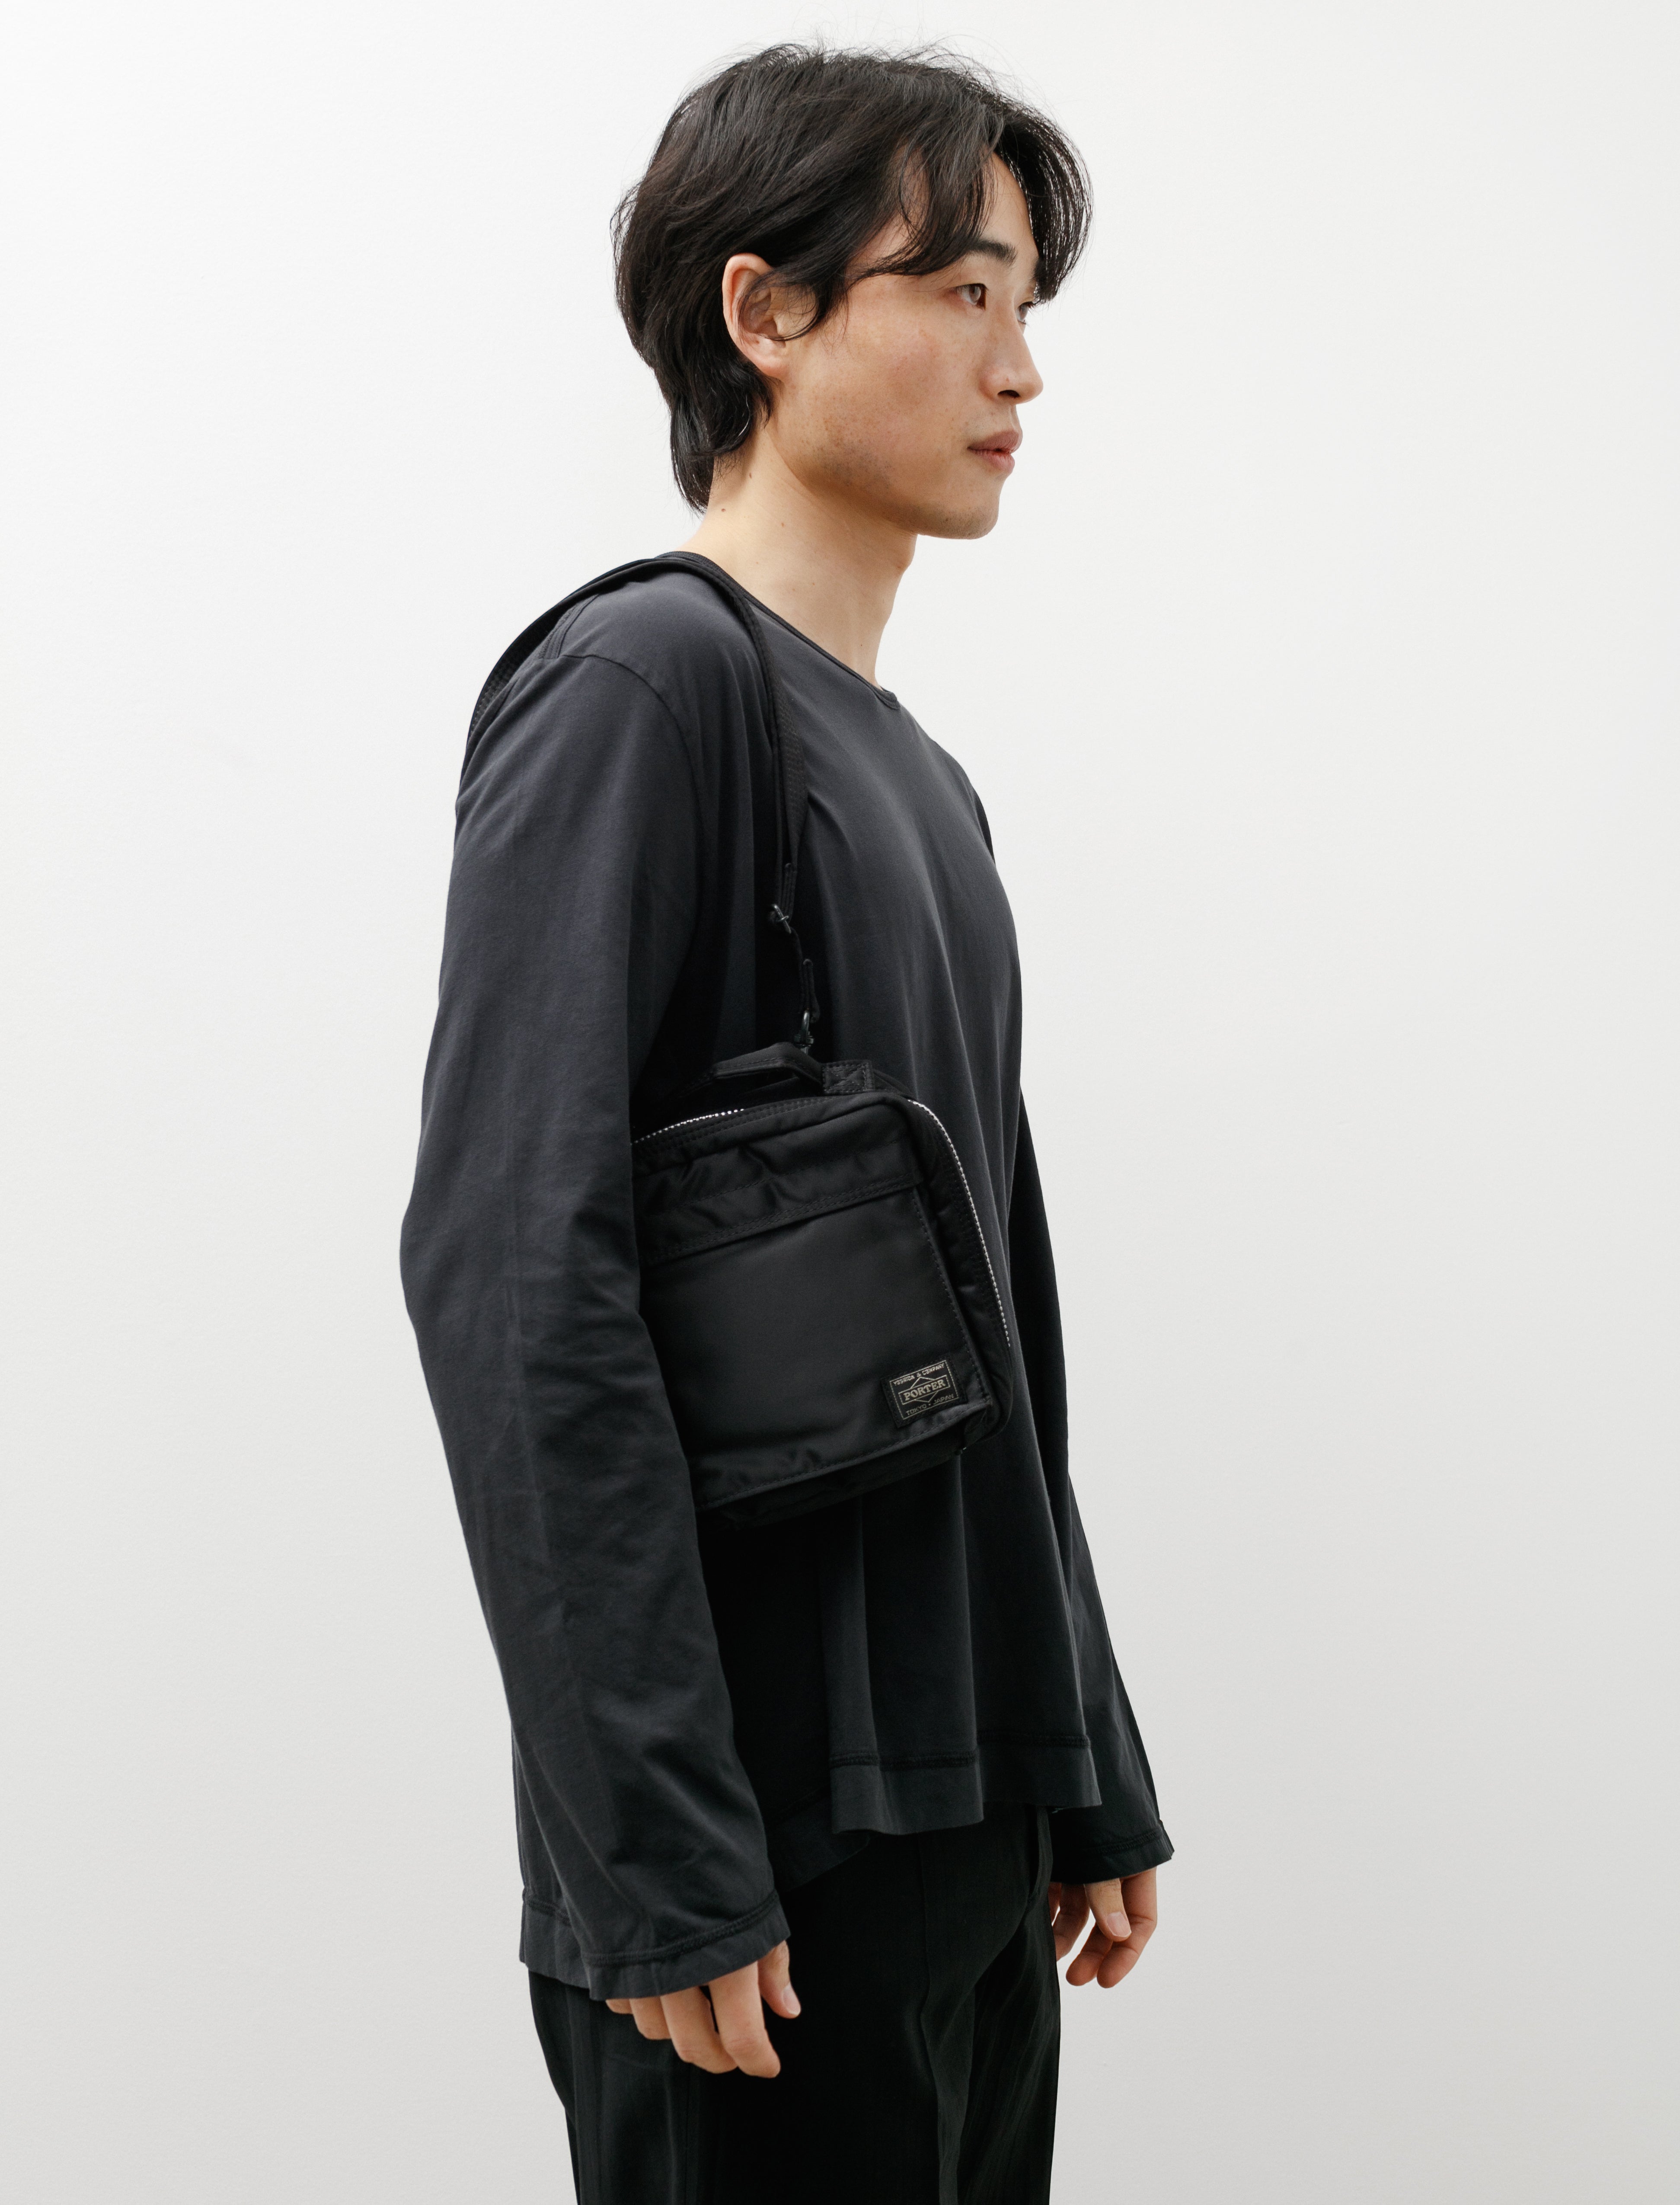 SARA small shoulder bag - Black